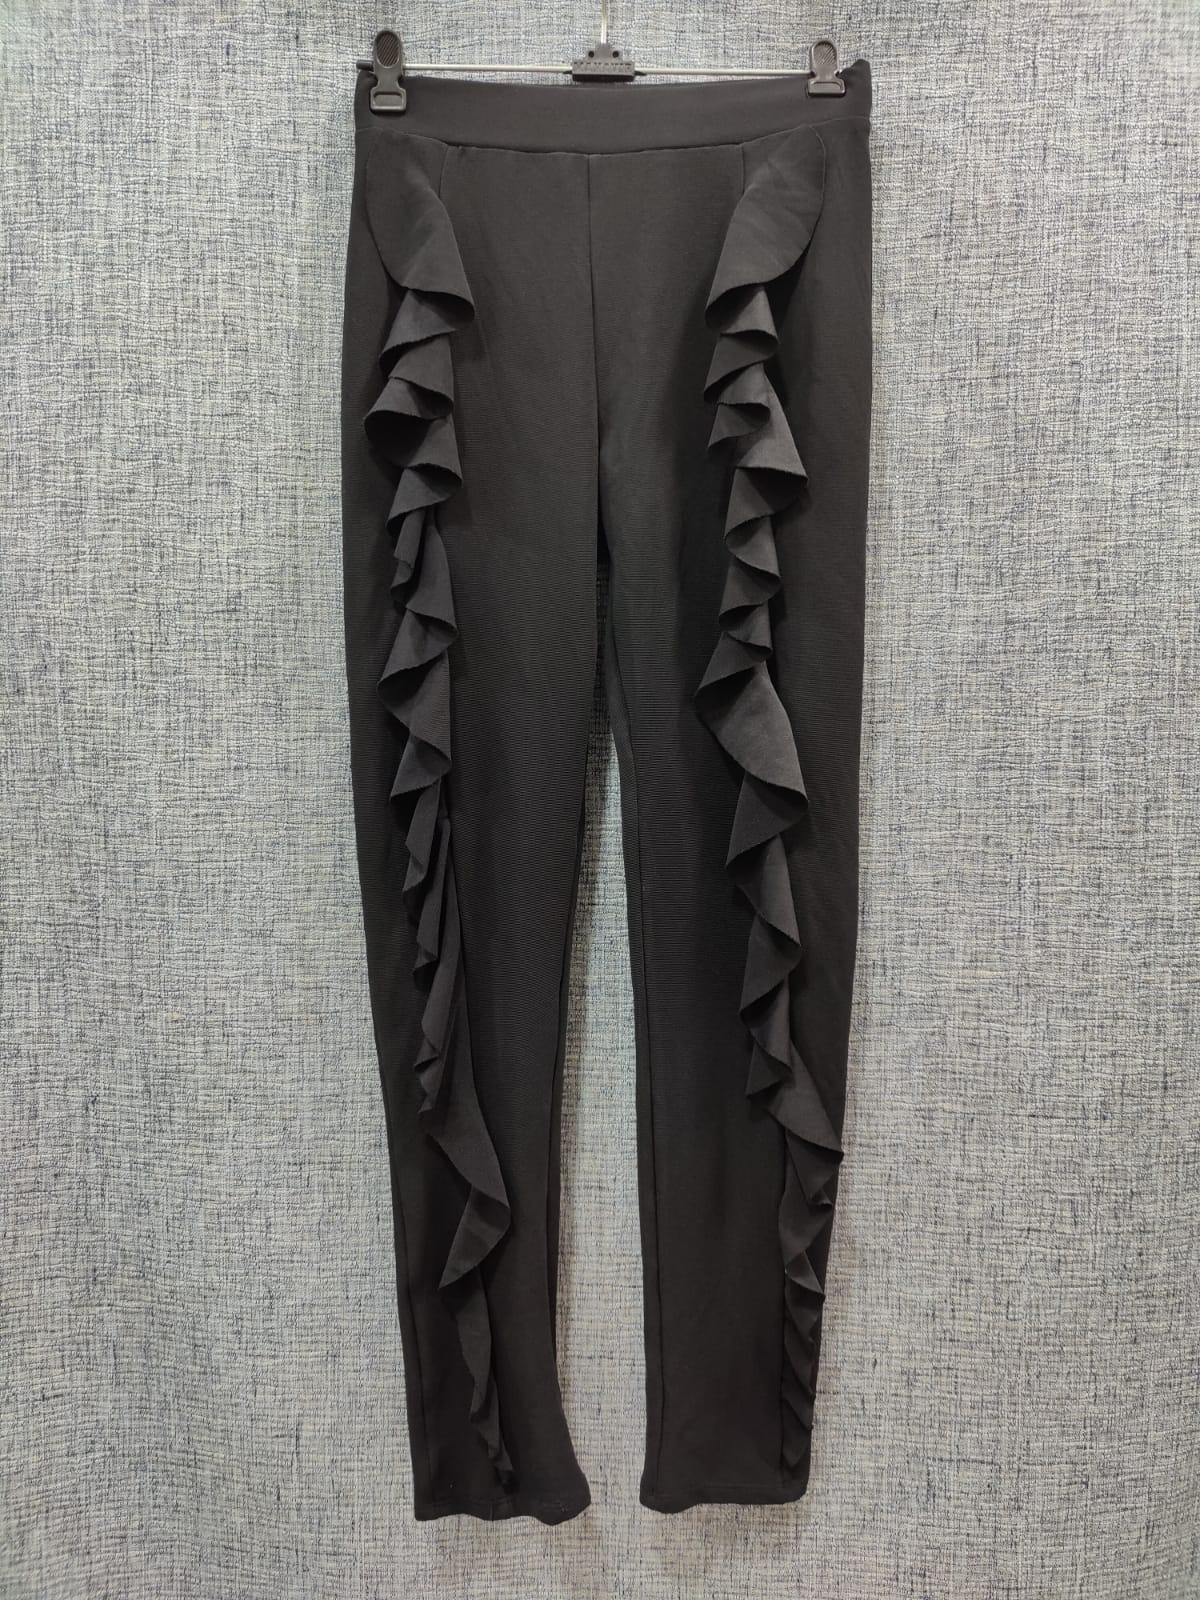 ZARA WOMEN NWT HIGH-WAISTED PANTS Wide Leg BLACK 8115/420 S | eBay